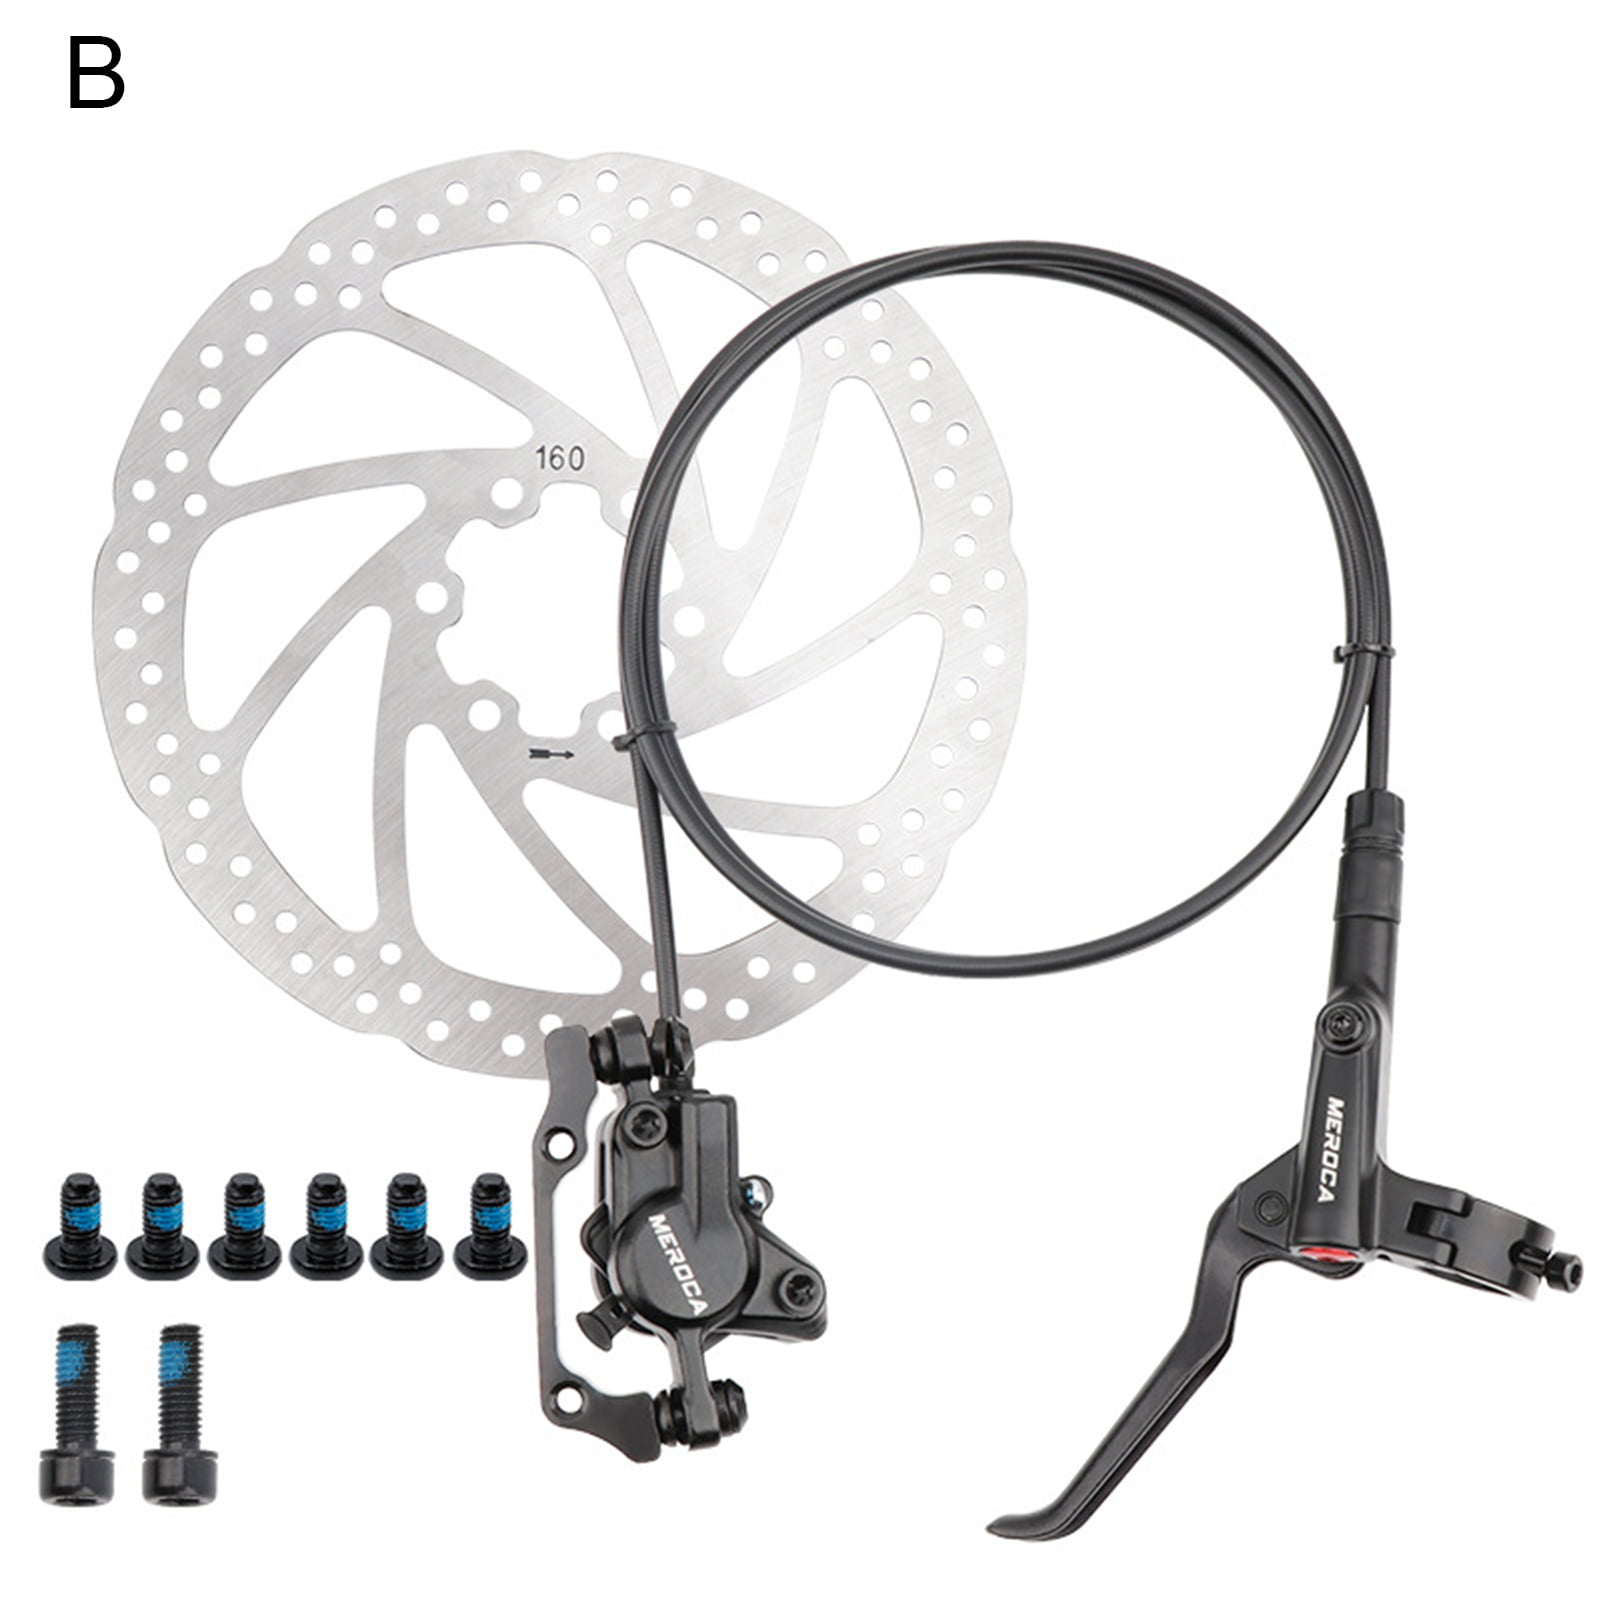 UDIYO Hydraulic Disc Brakes High-sensitivity Wear Resistance Water-proof  MTB Road Bike Rear Disc Brake Levers Rotors Kit for Bicycle